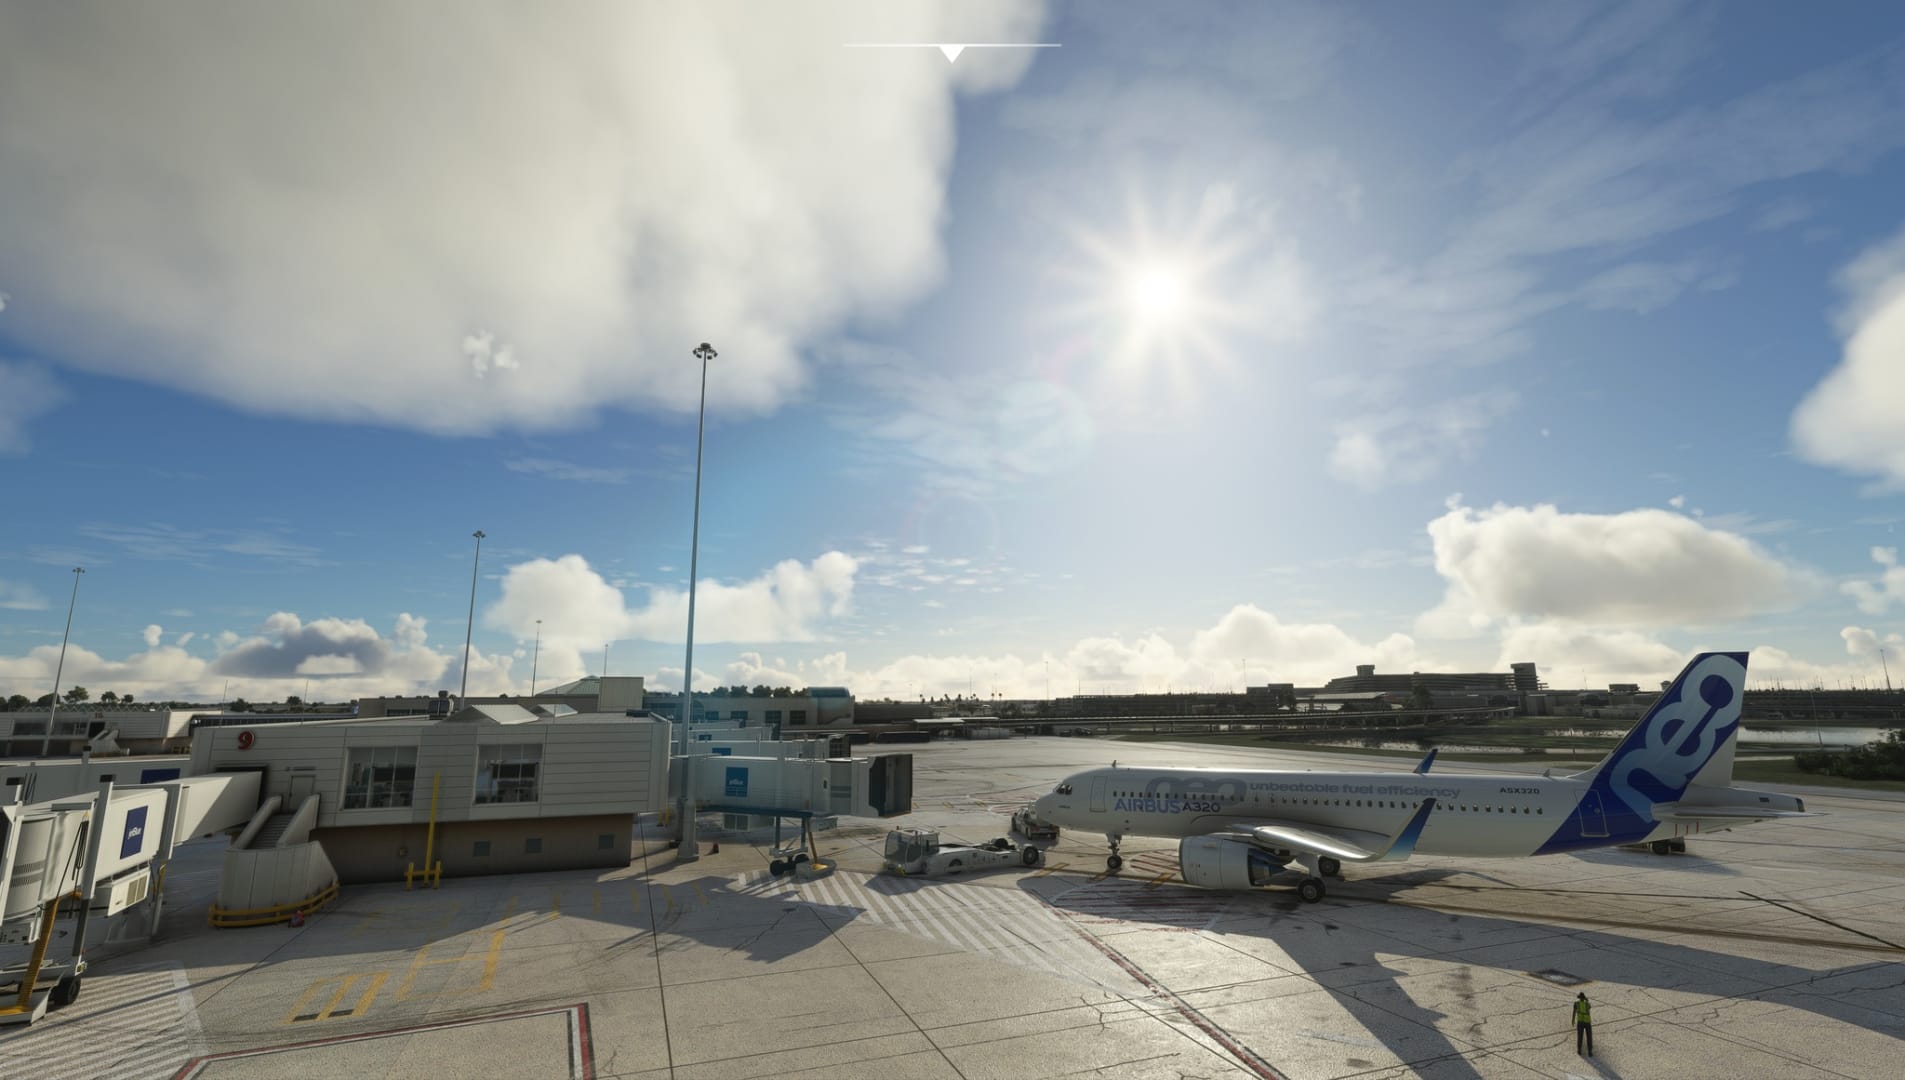 Orlando International Airport by Taxi2Gate for Microsoft Flight Simulator